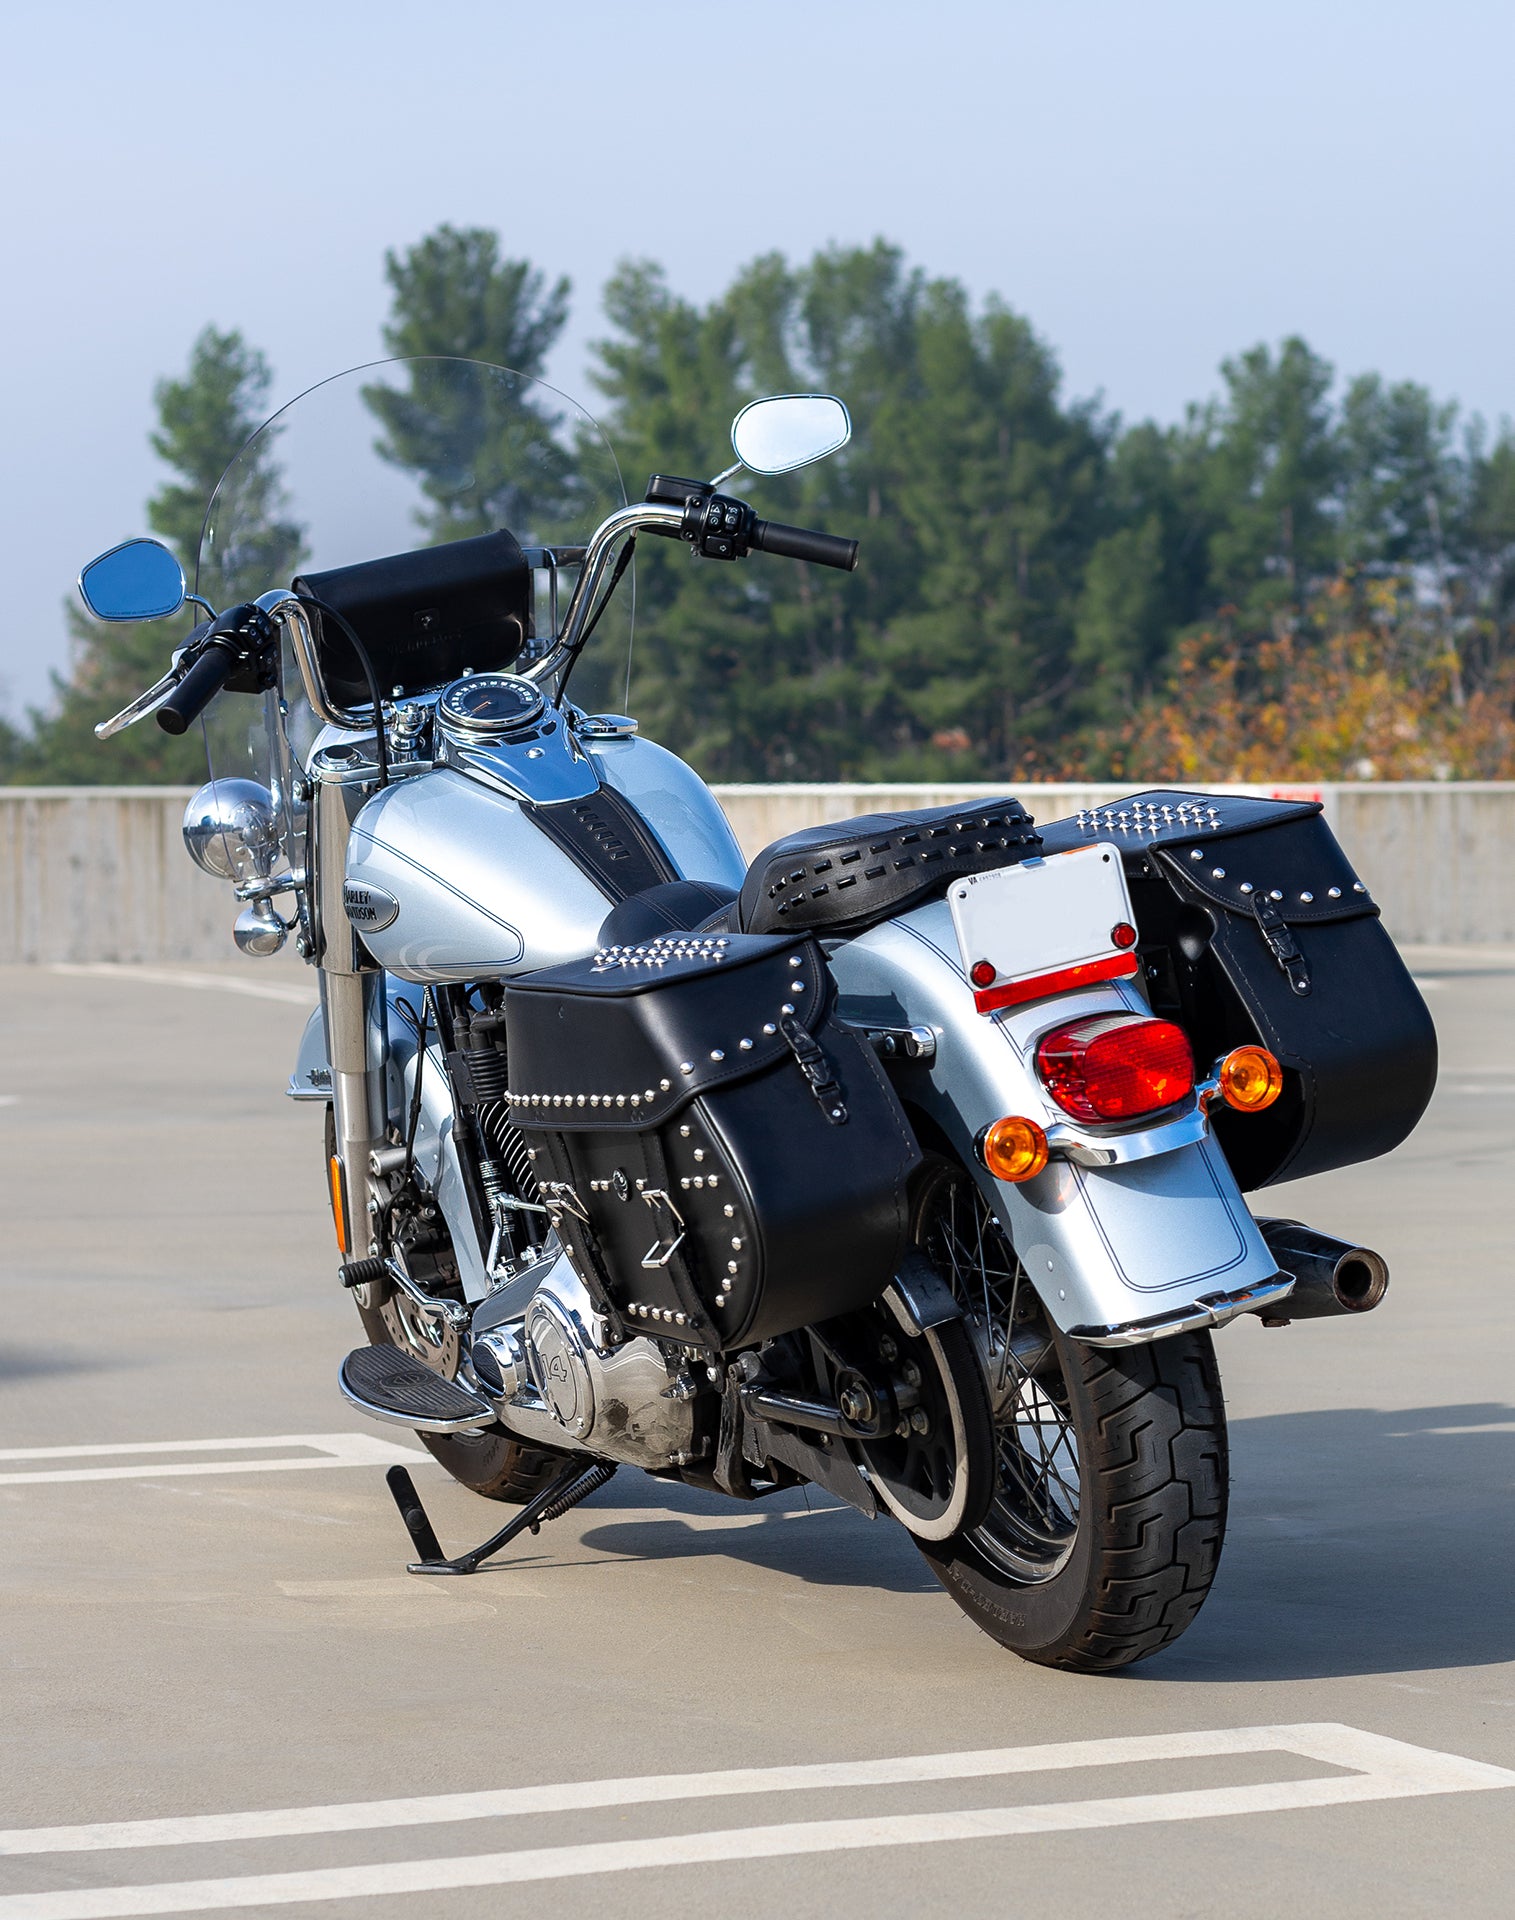 Viking Legacy Extra Large Studded Leather Motorcycle Saddlebags For Harley Softail Heritage Flst I C Ci are Durable